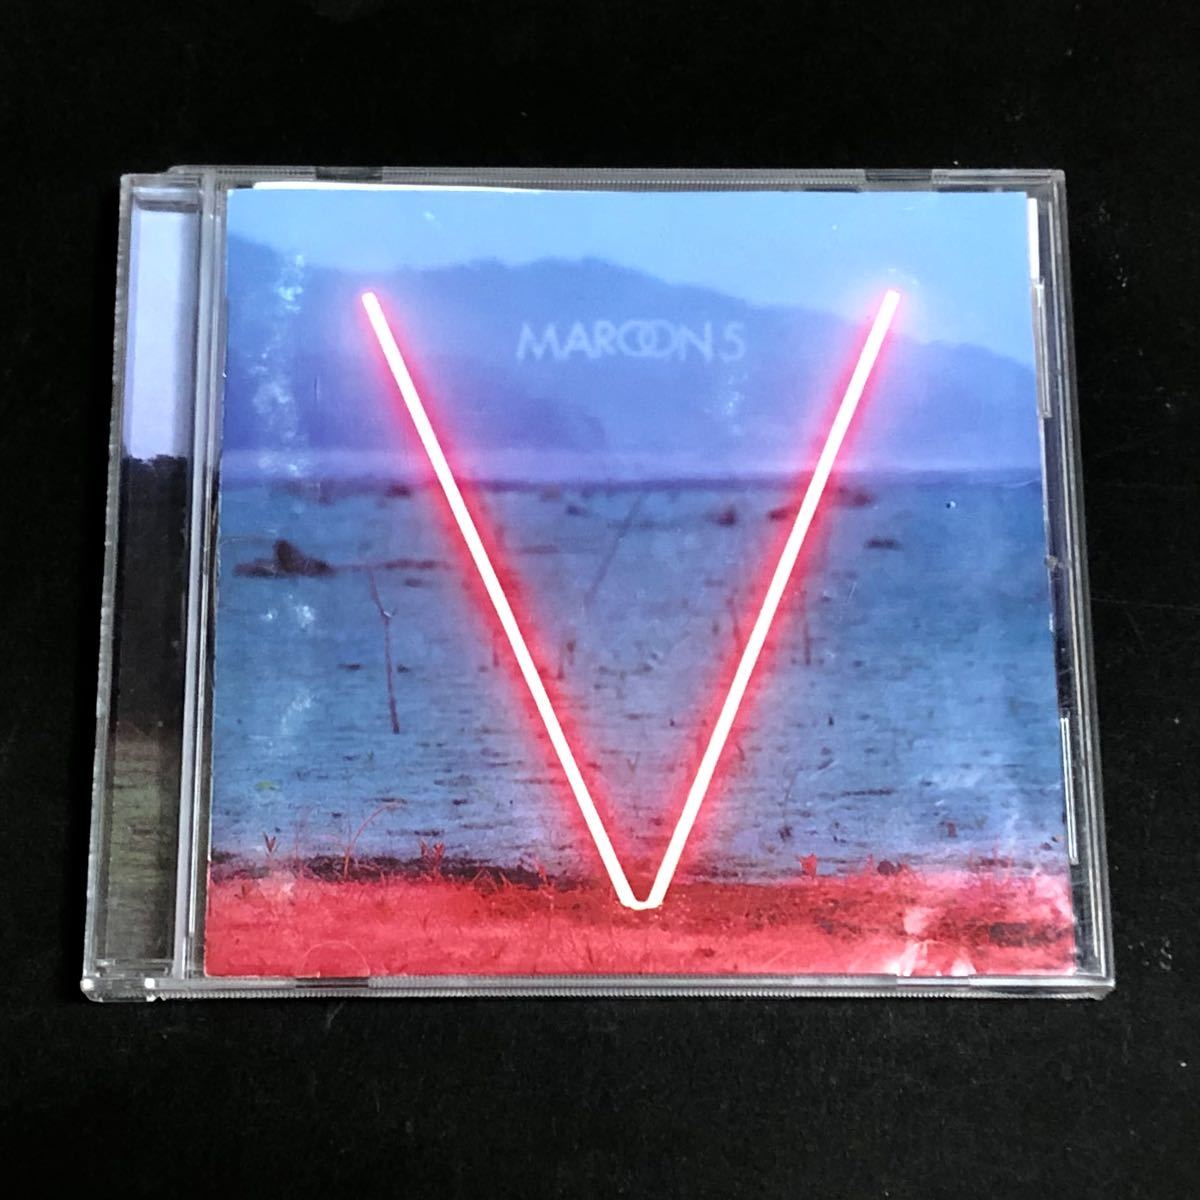 【CD】V / マルーン5